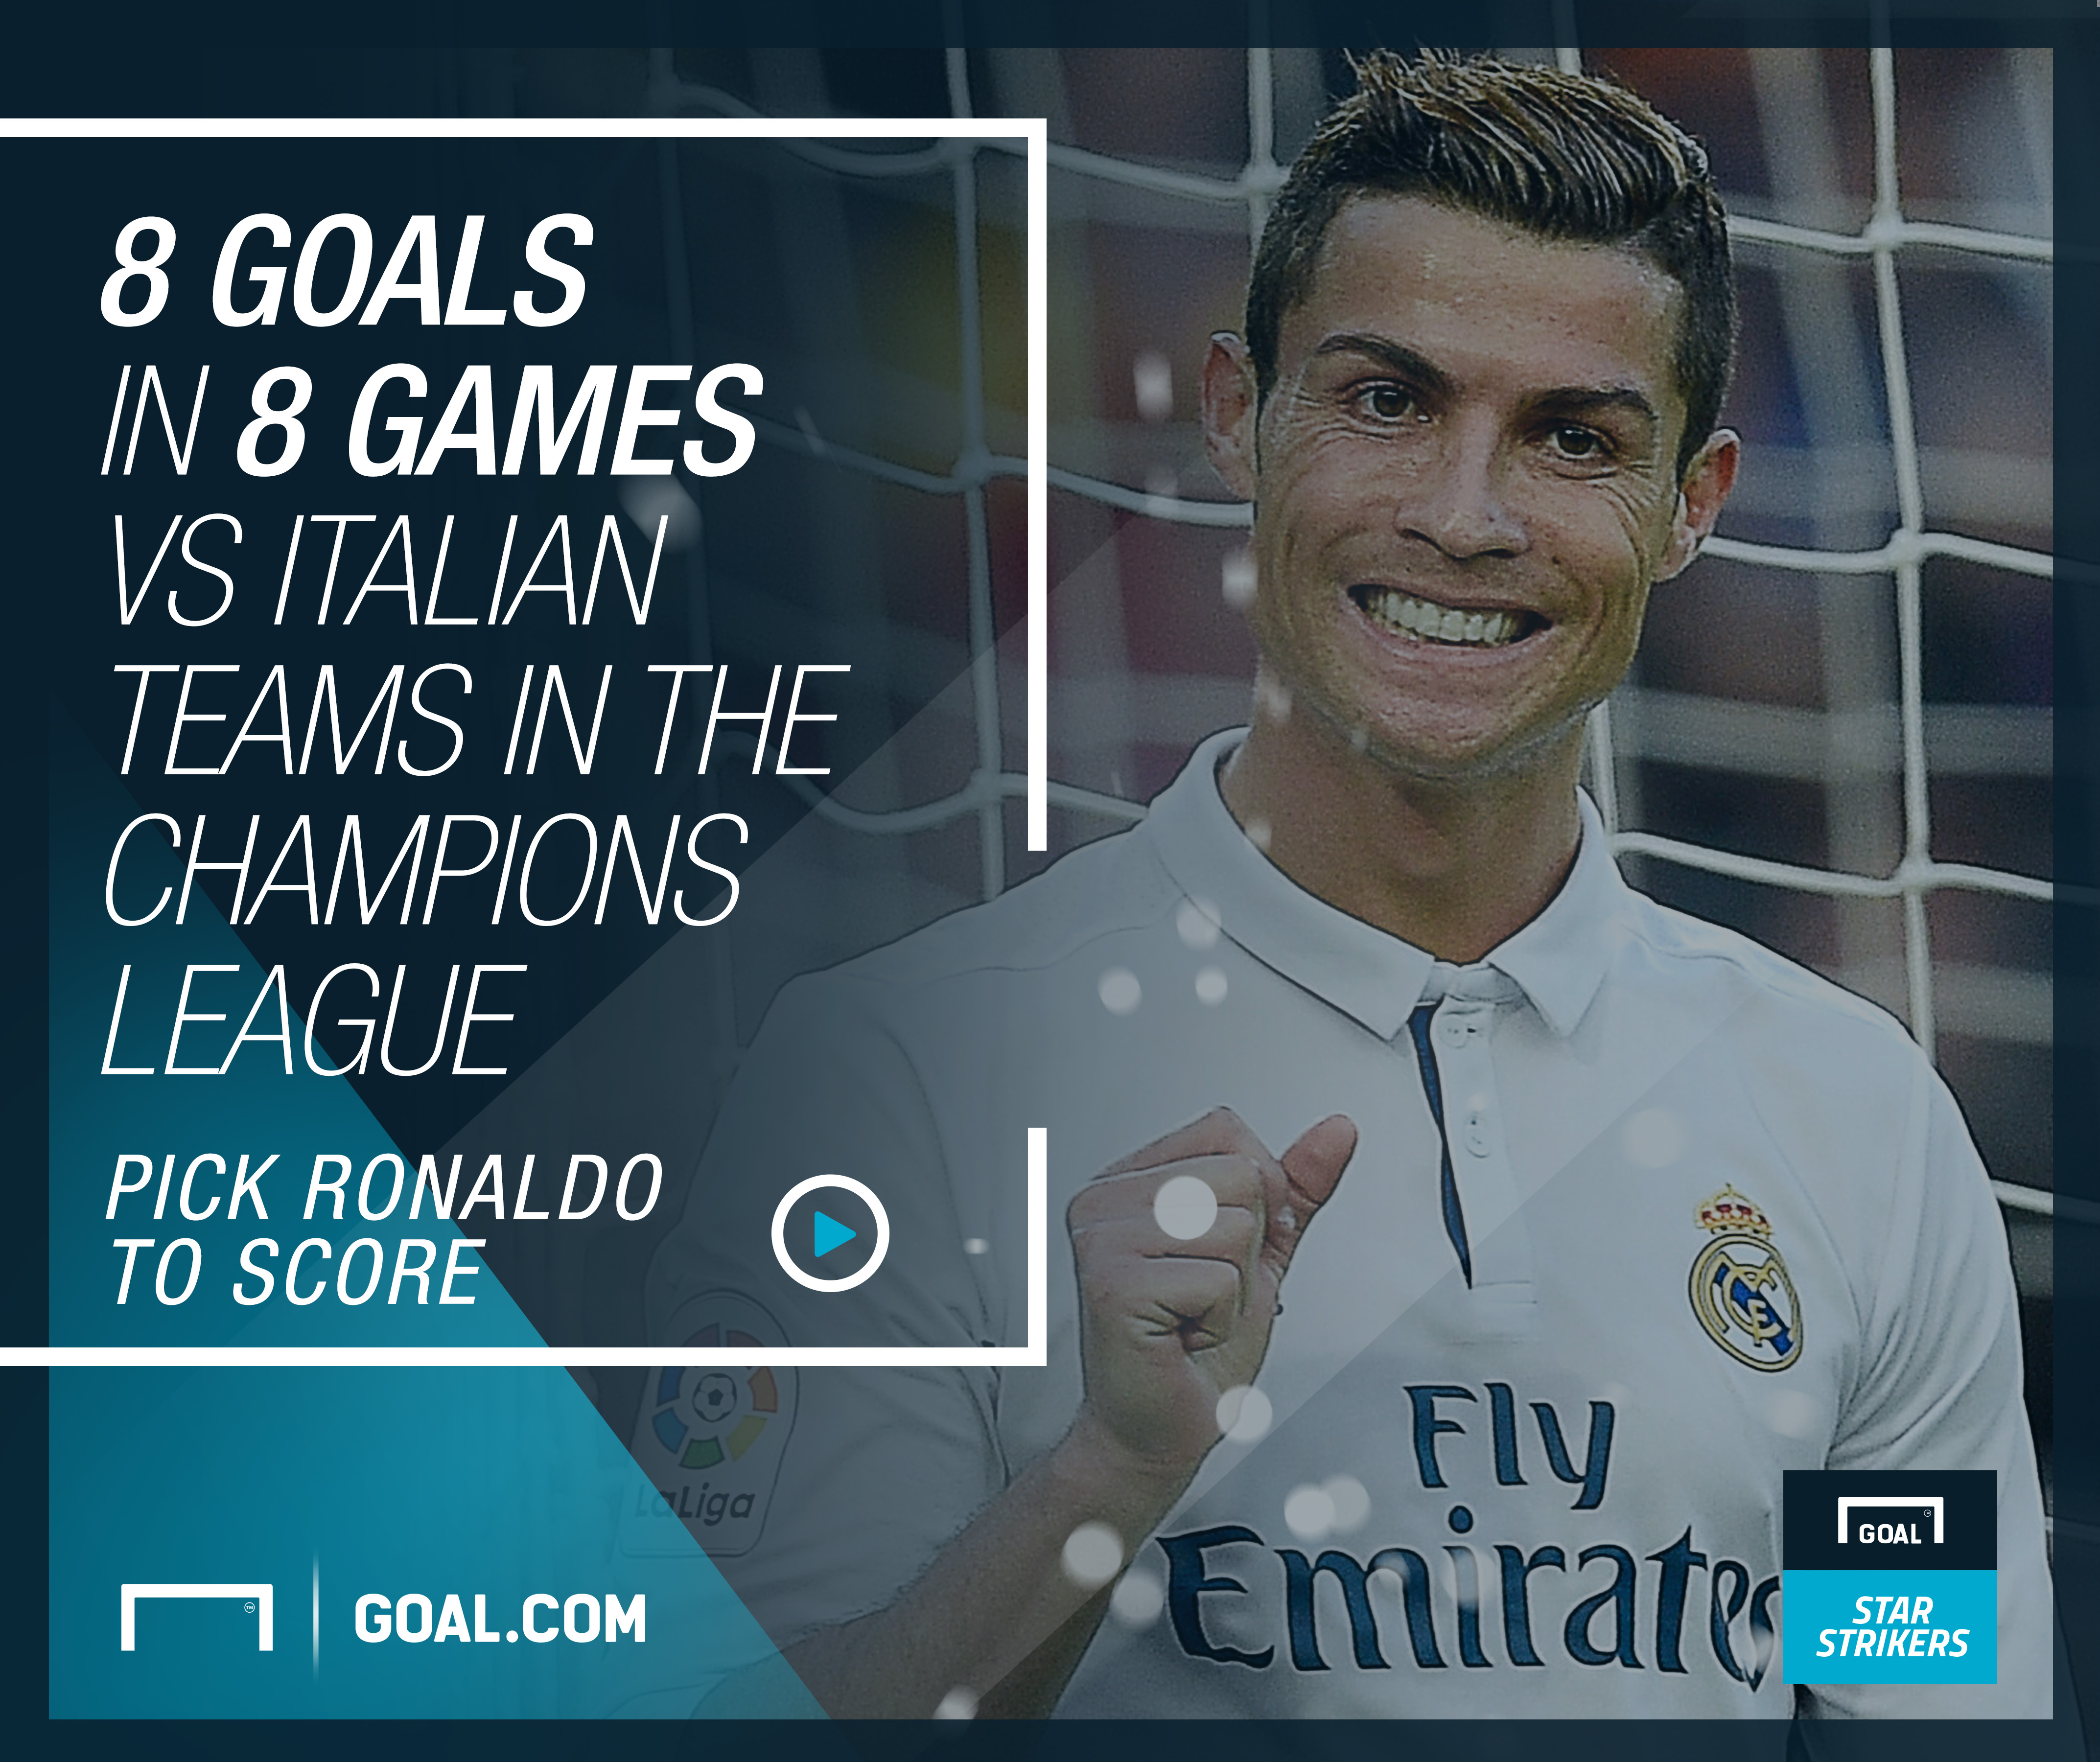 Goal Star Strikers - Ronaldo